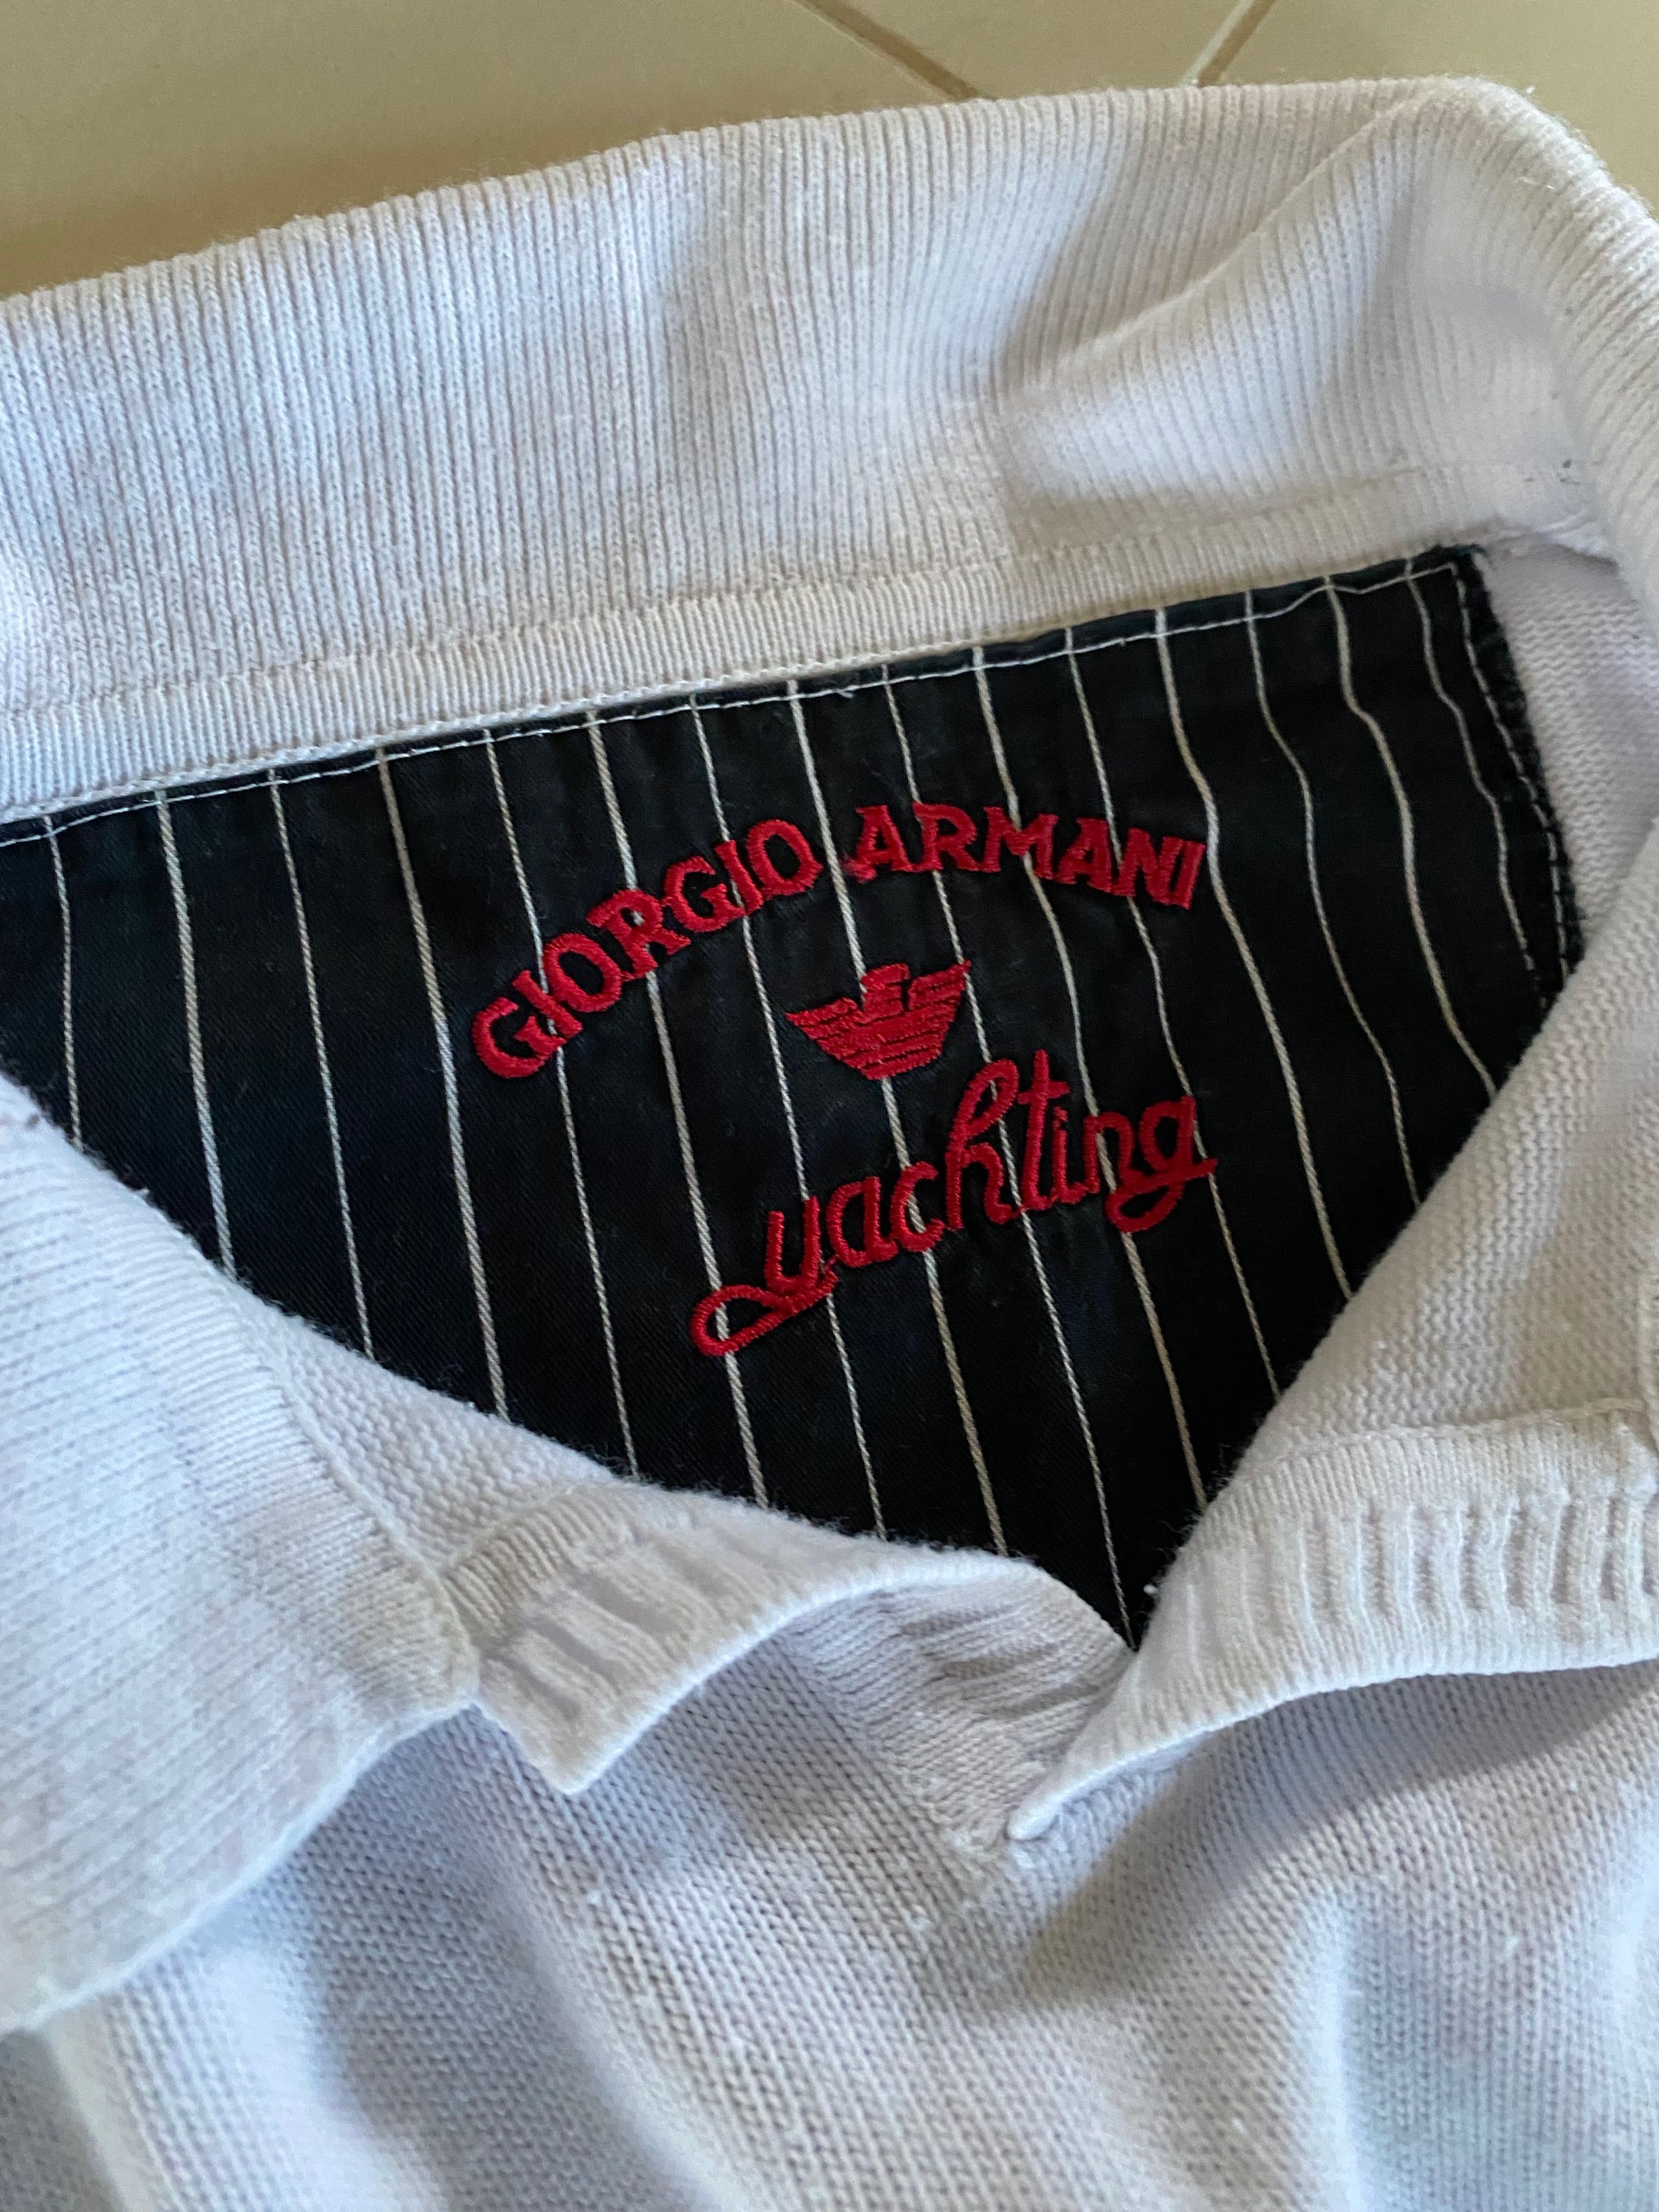 Giorgio Armani yachting sweter pulover vintage unikat